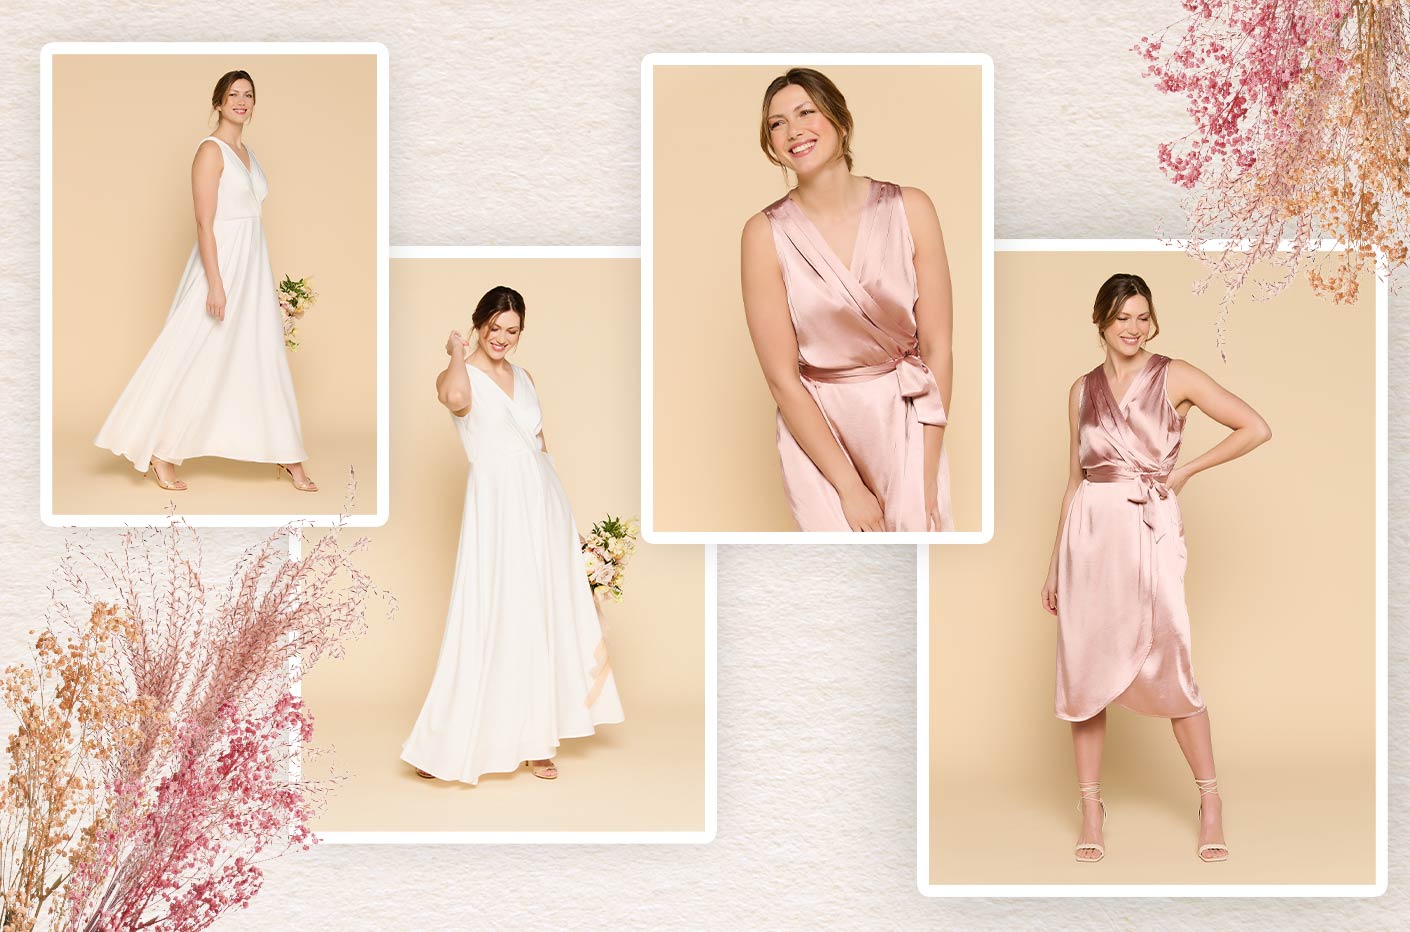 Long classic bridal dress, pink satin wrap dress